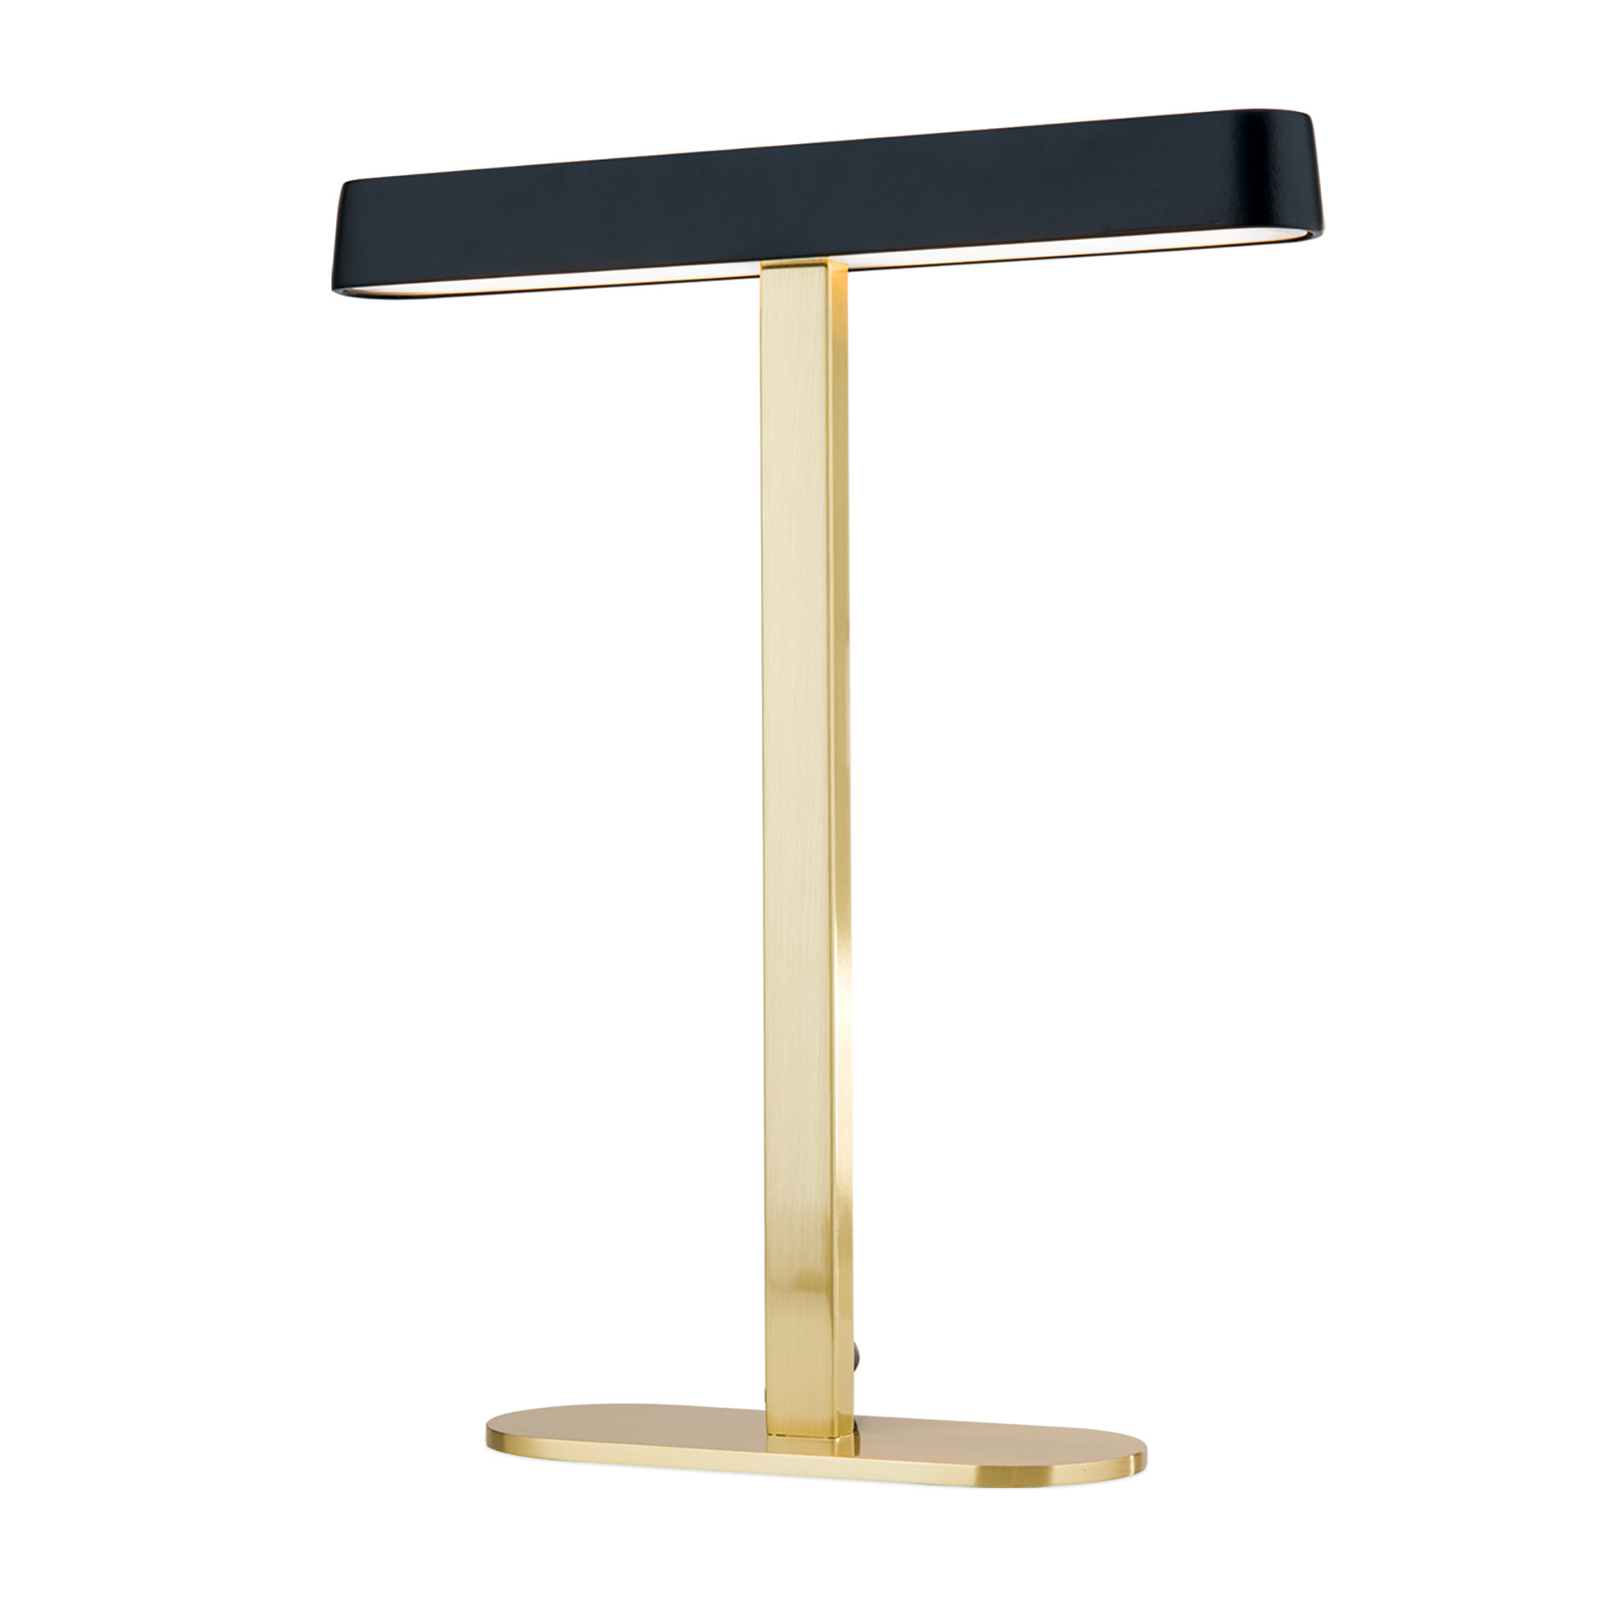 LED table lamp Auftakt gold/black